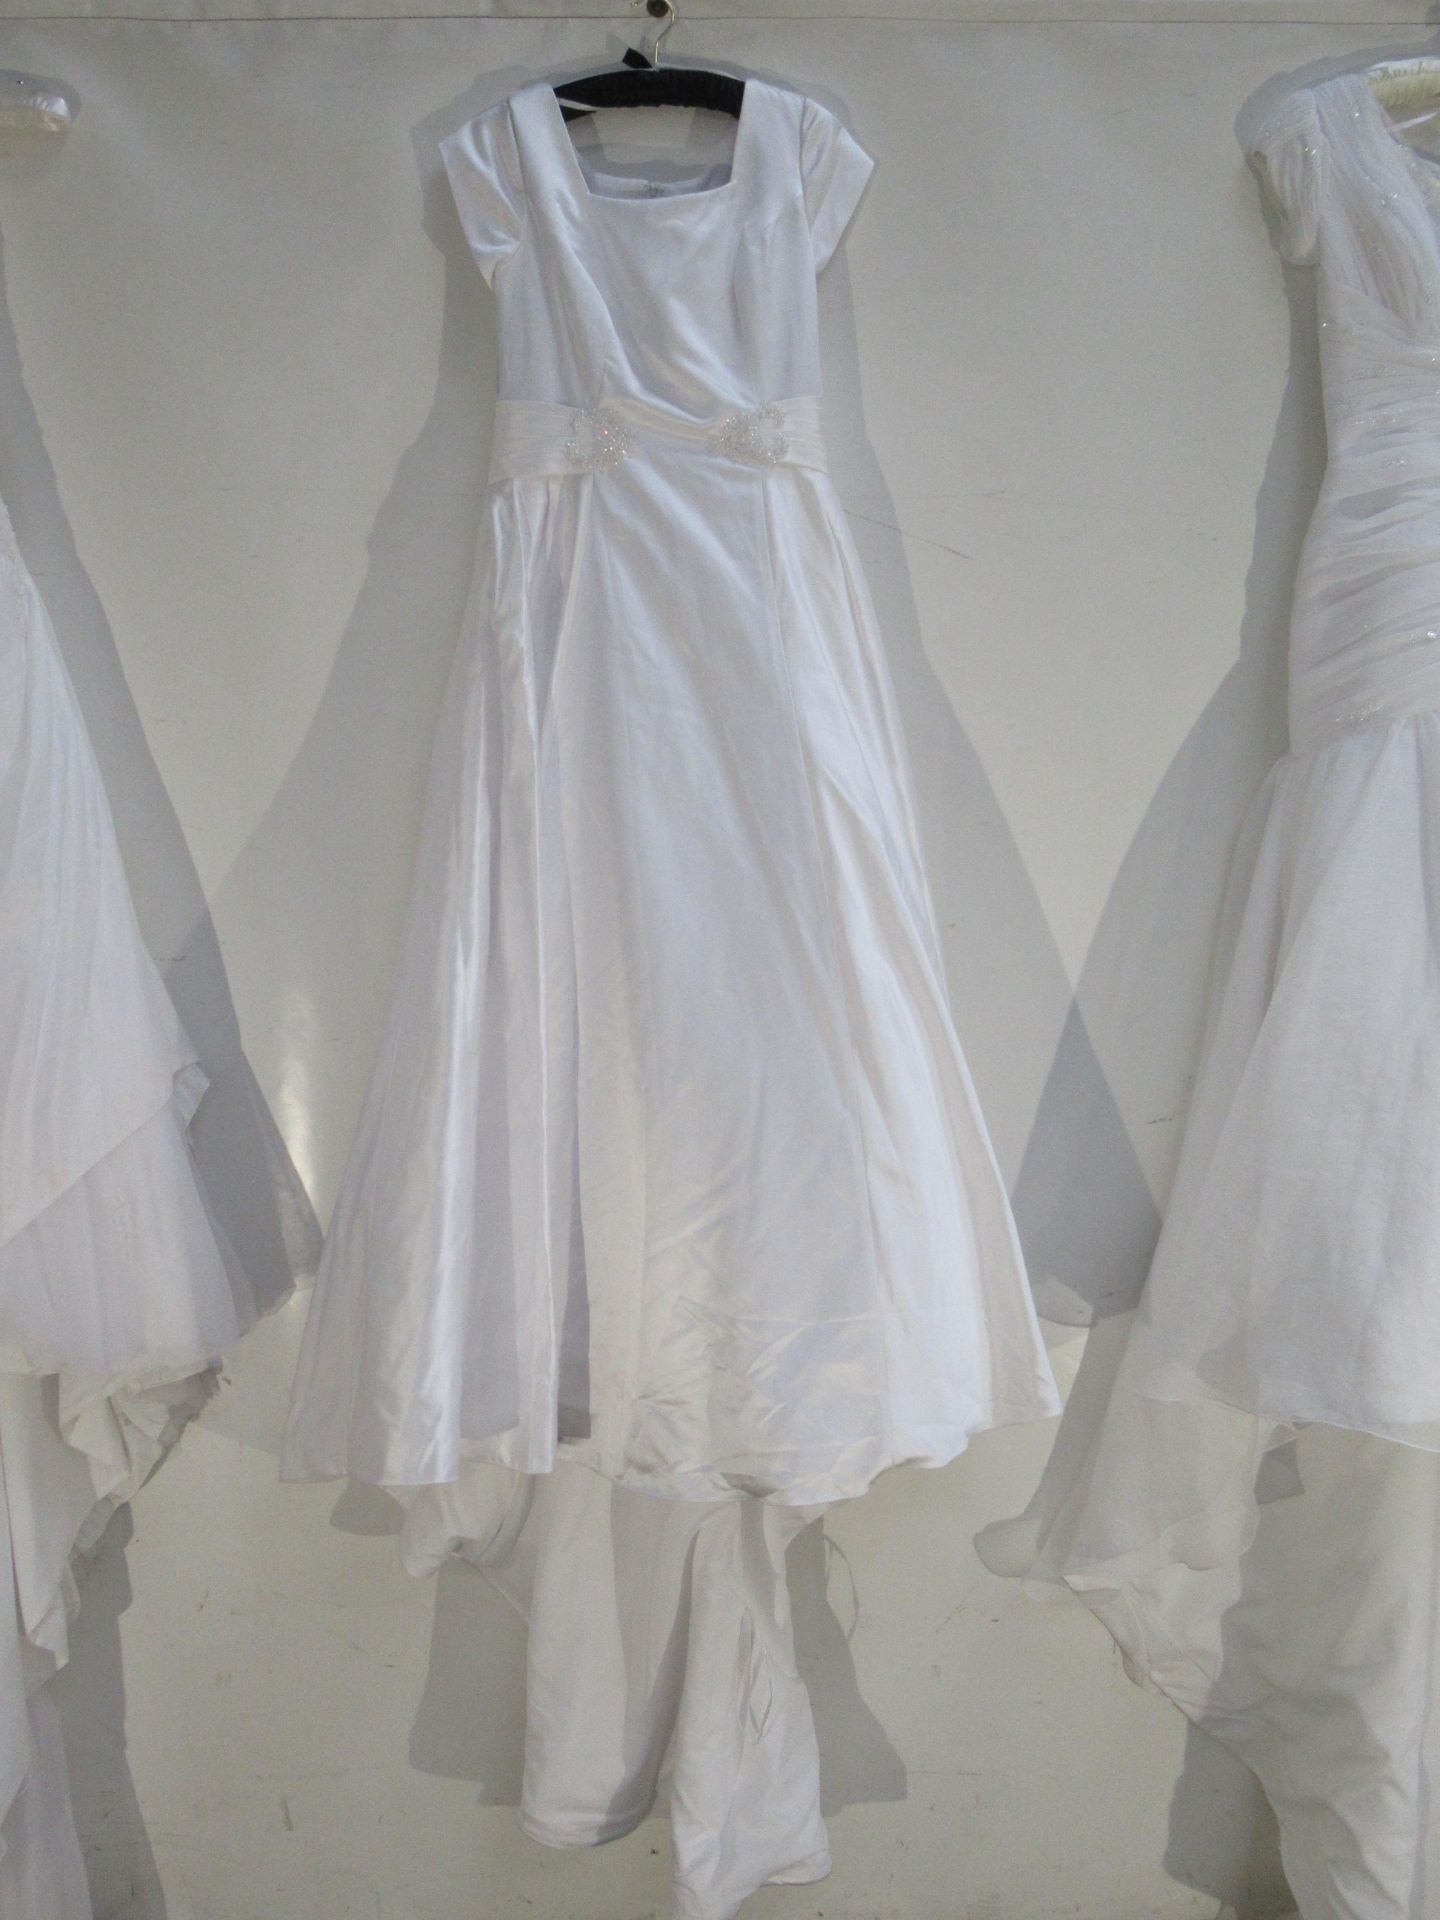 4x wedding dresses - Image 3 of 5